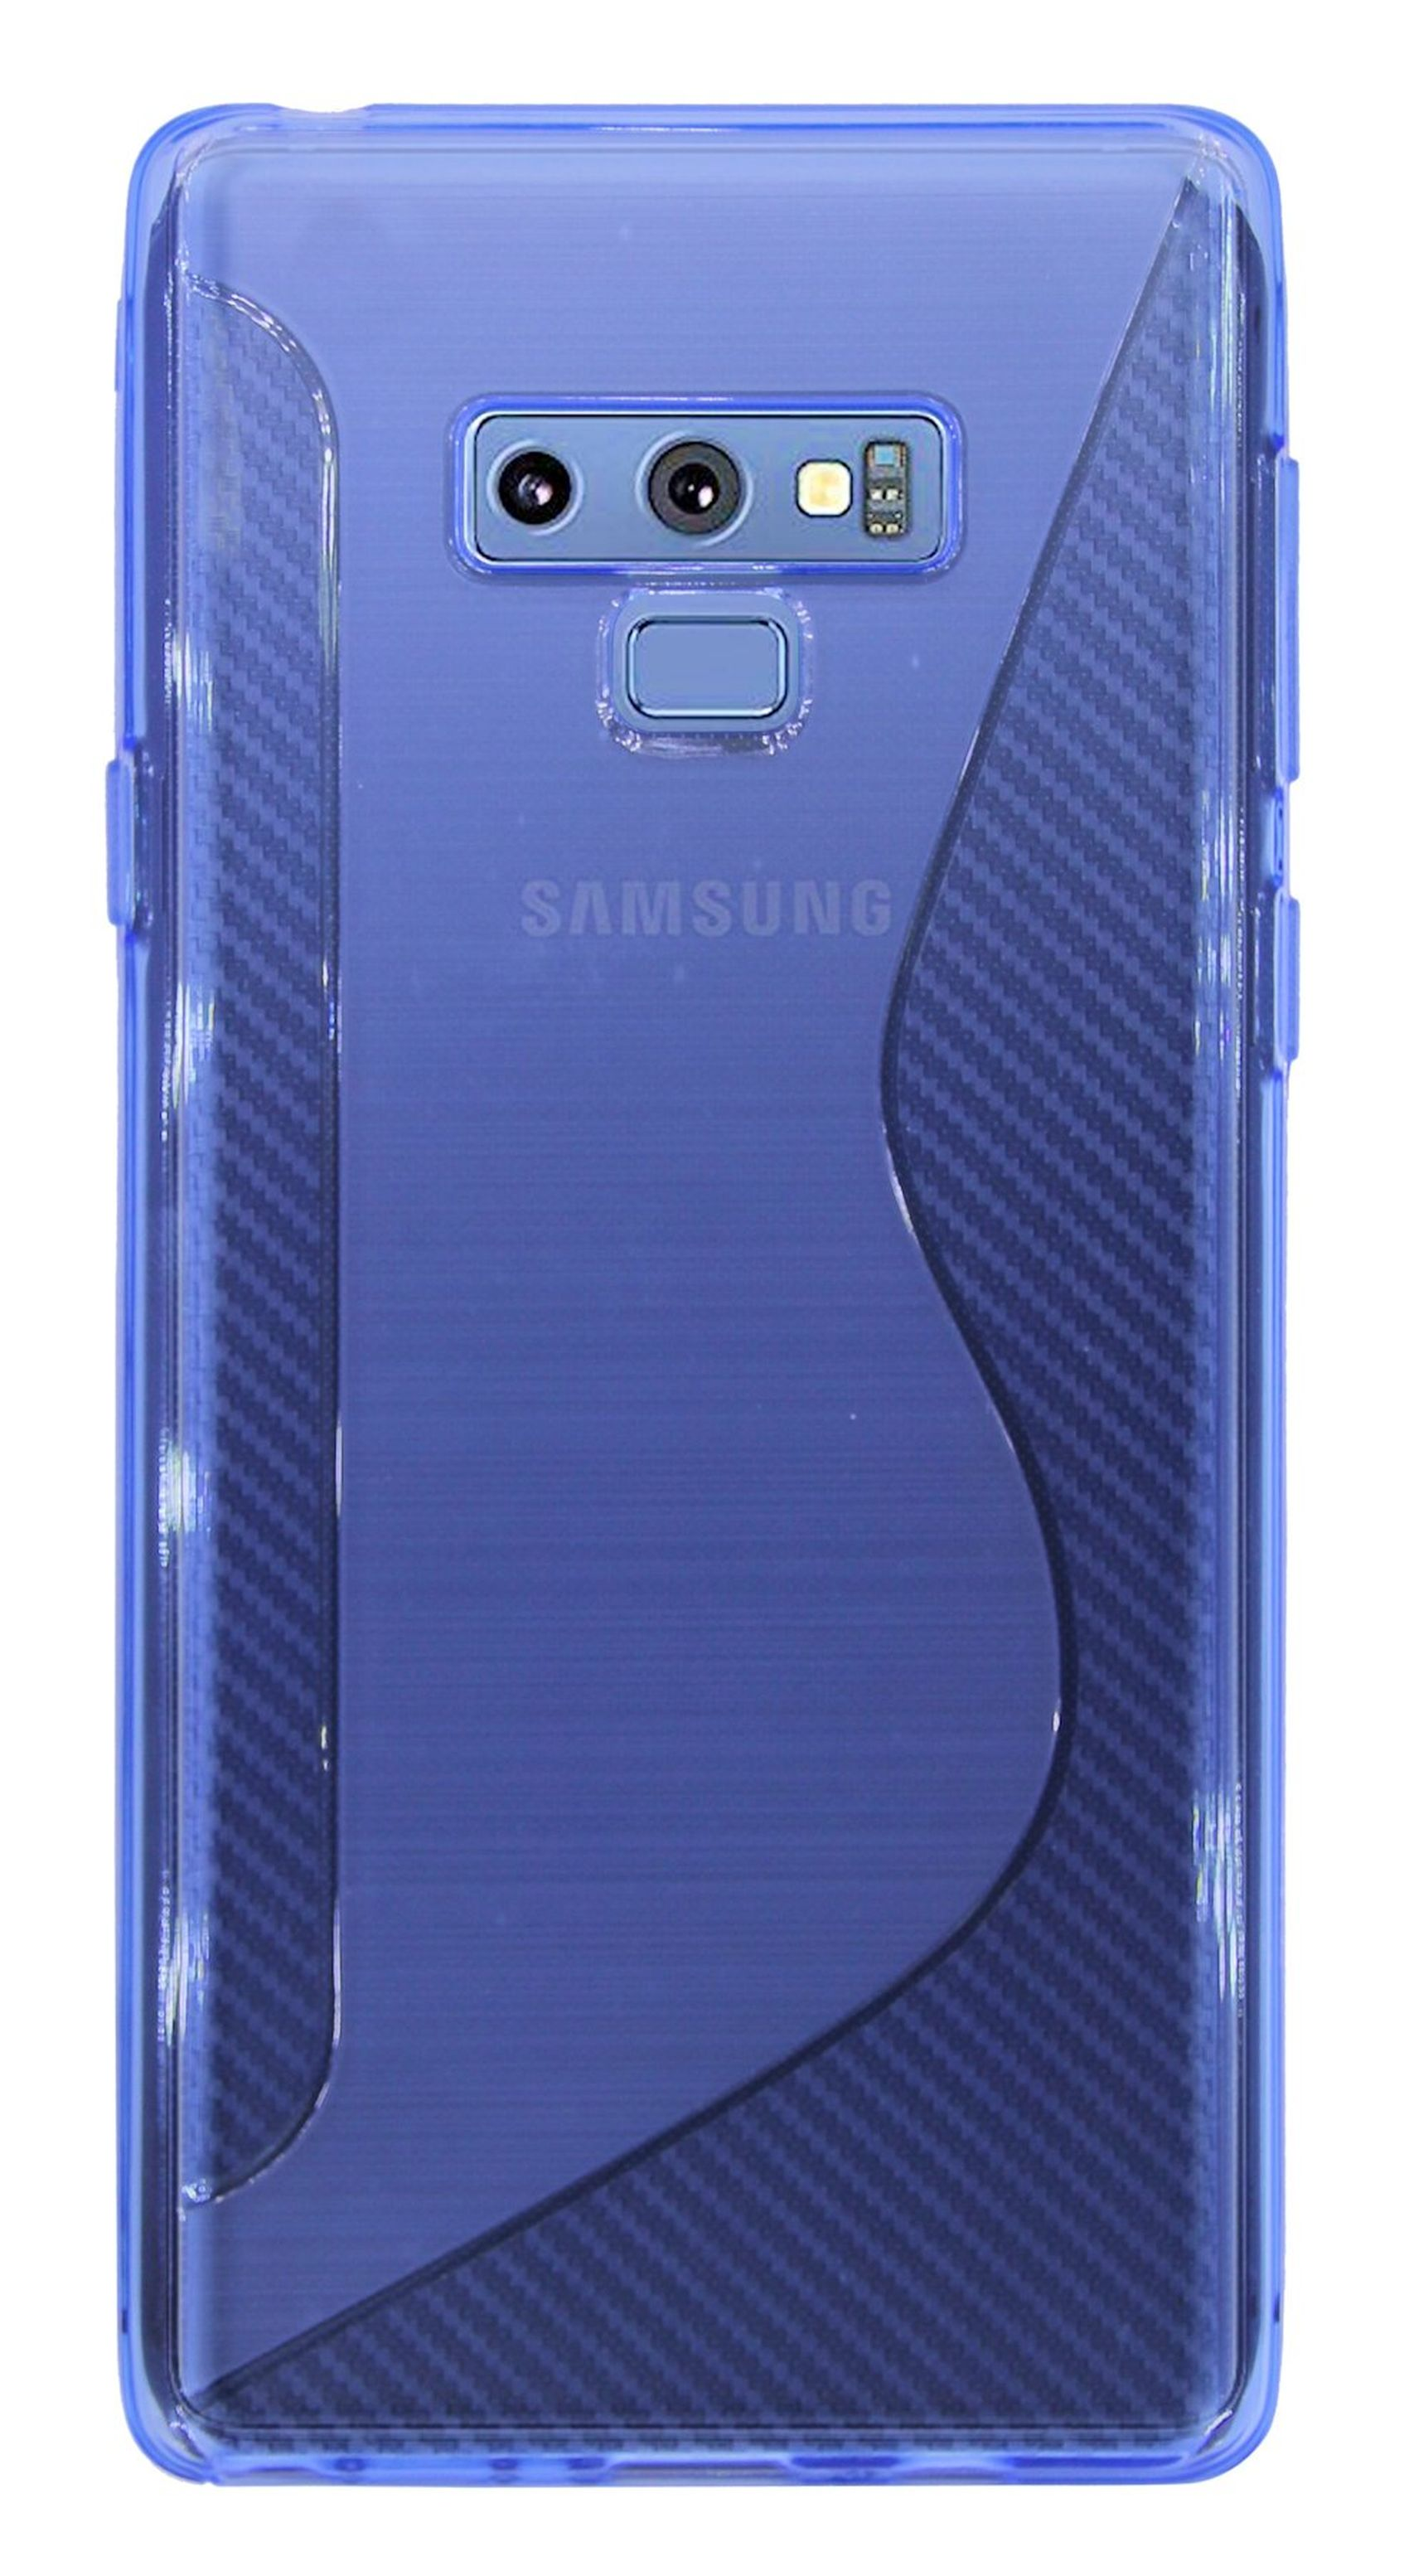 COFI S-Line Blau Bumper, 9, Galaxy Cover, Note Samsung